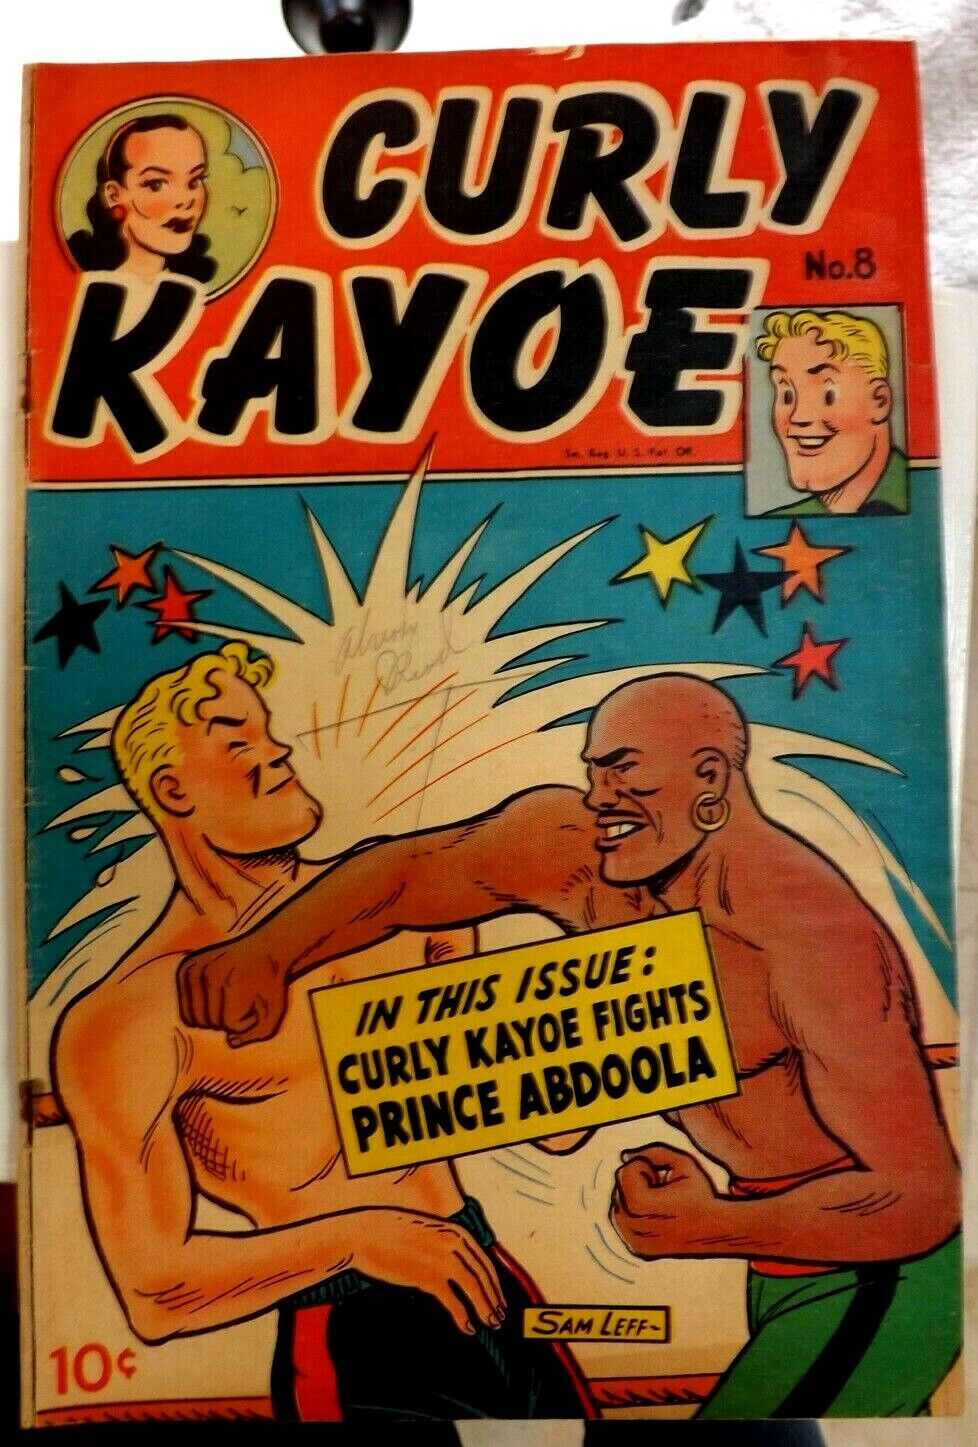 VTG 1940-50s CURLY KAYOE #8 TEN CENT COMIC BOOK GOLDEN AGE BOXING COVER SAM LEFF